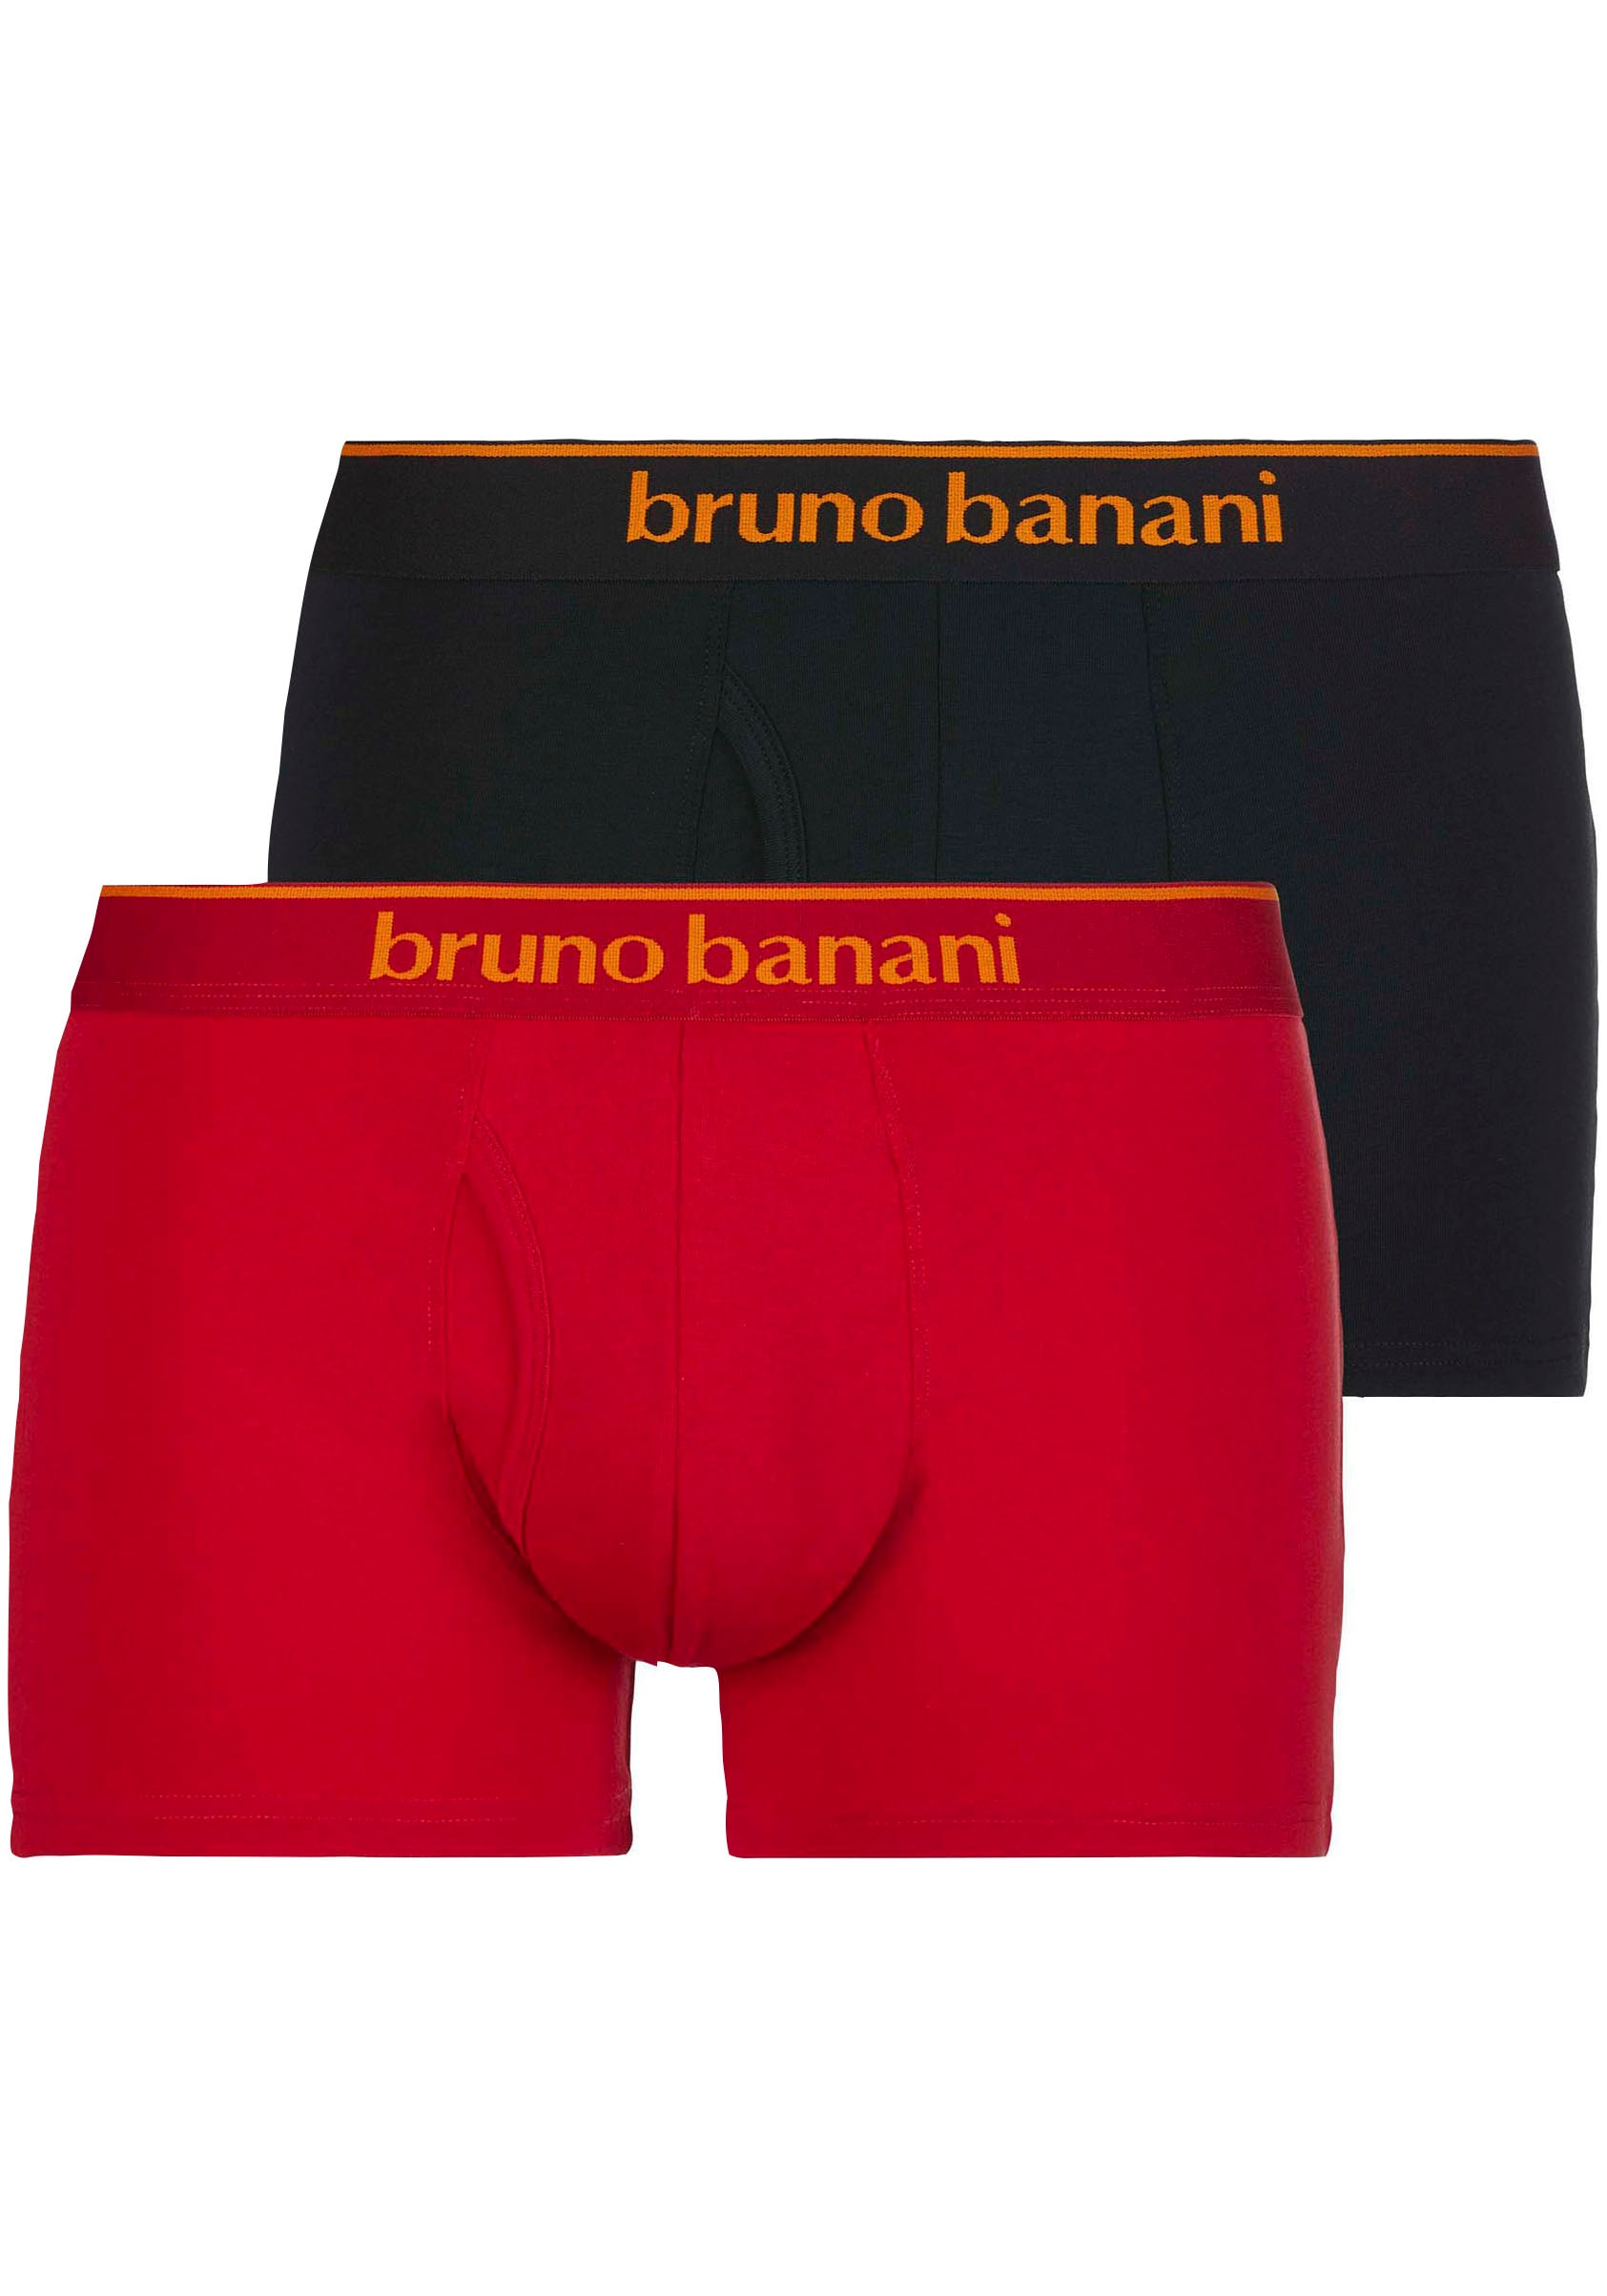 Bruno Kontrastfarbene 2 Access«, ♕ (Packung, Quick Banani bei »Short Boxershorts St.), 2Pack Details